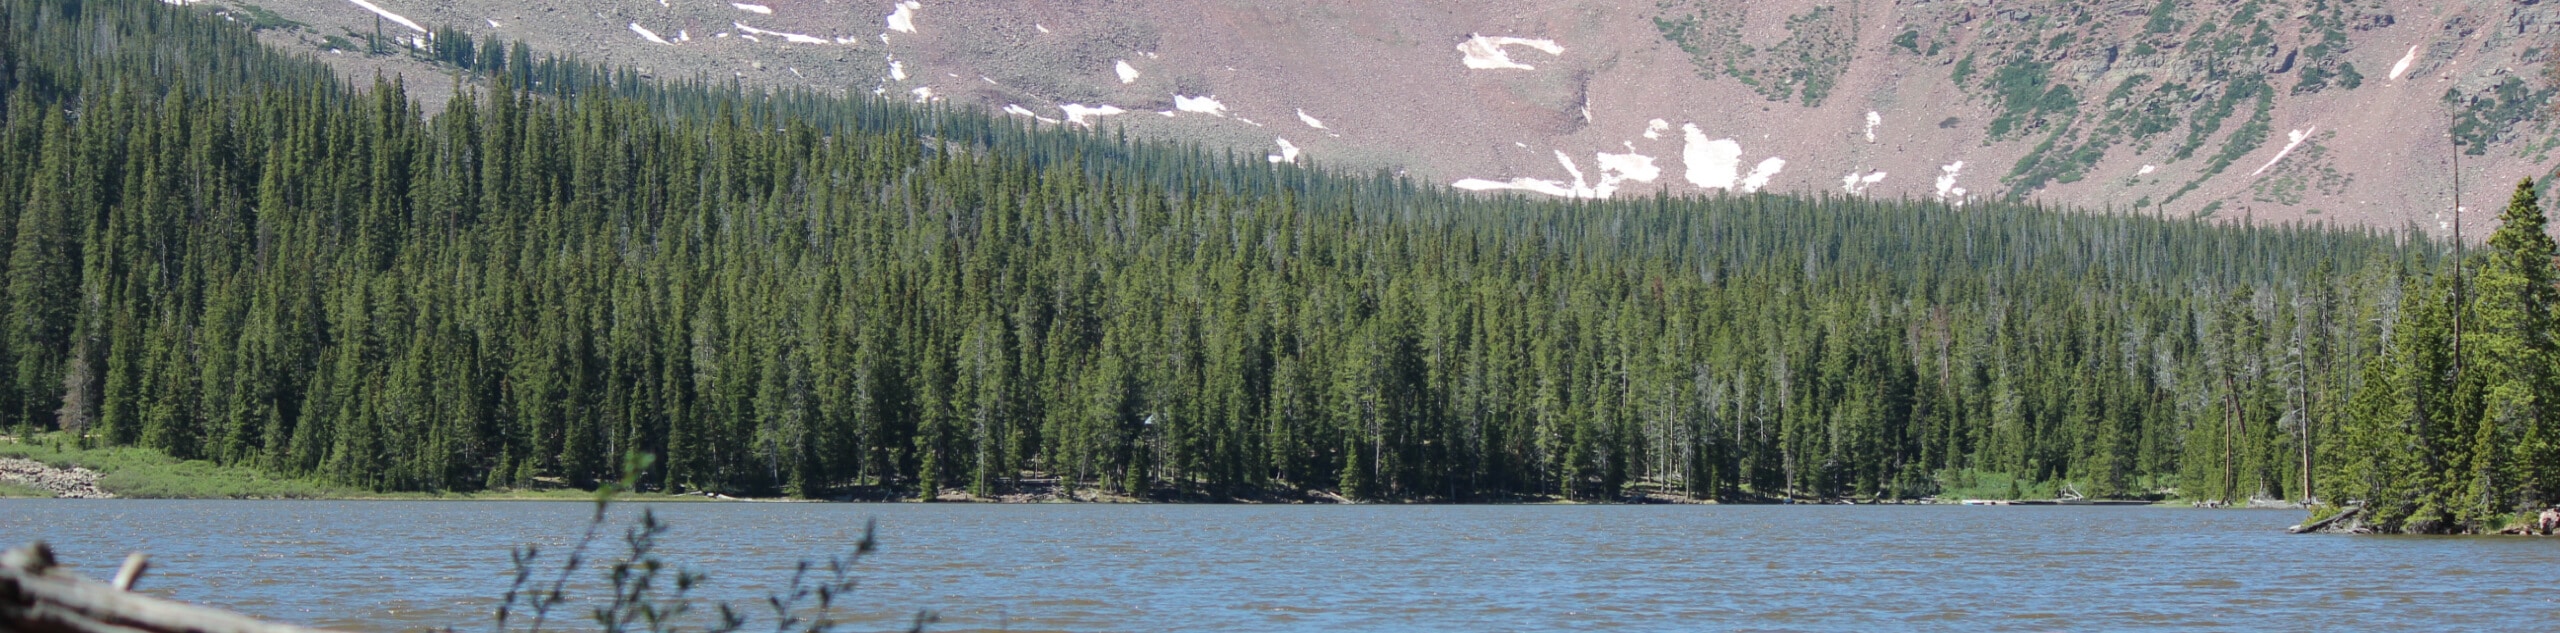 Daggett Lake via Spirit Lake